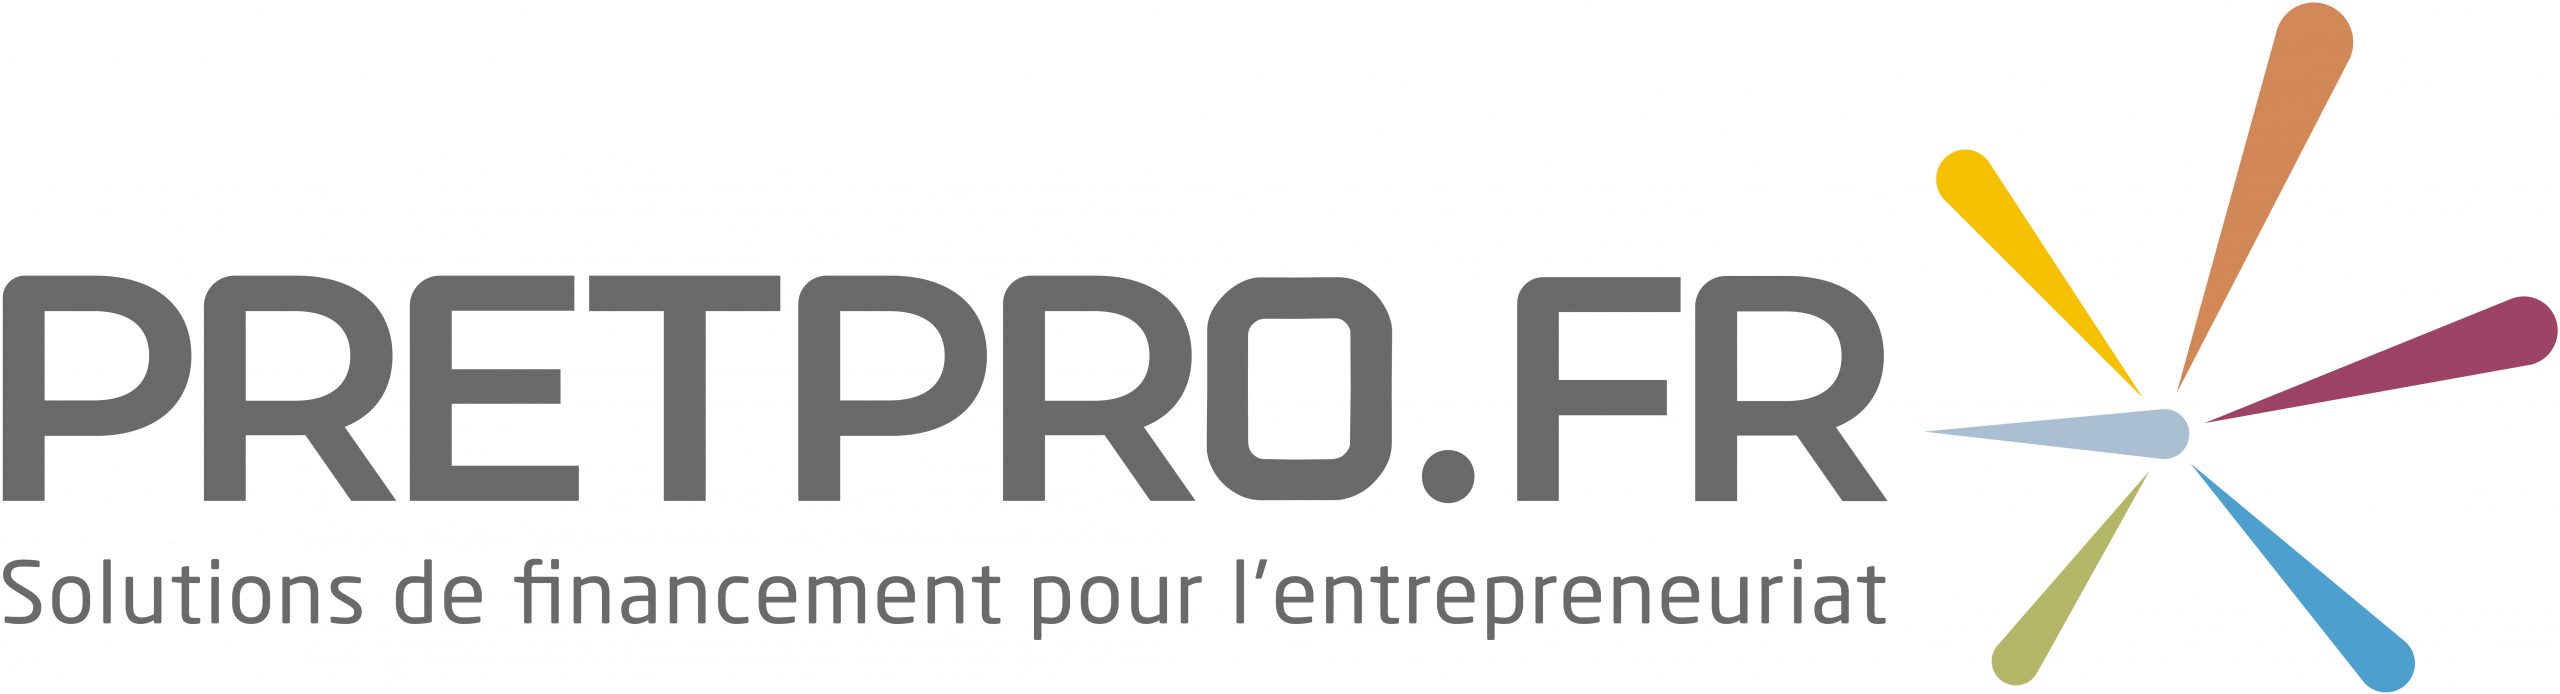 Pretpro.fr – Occitanie